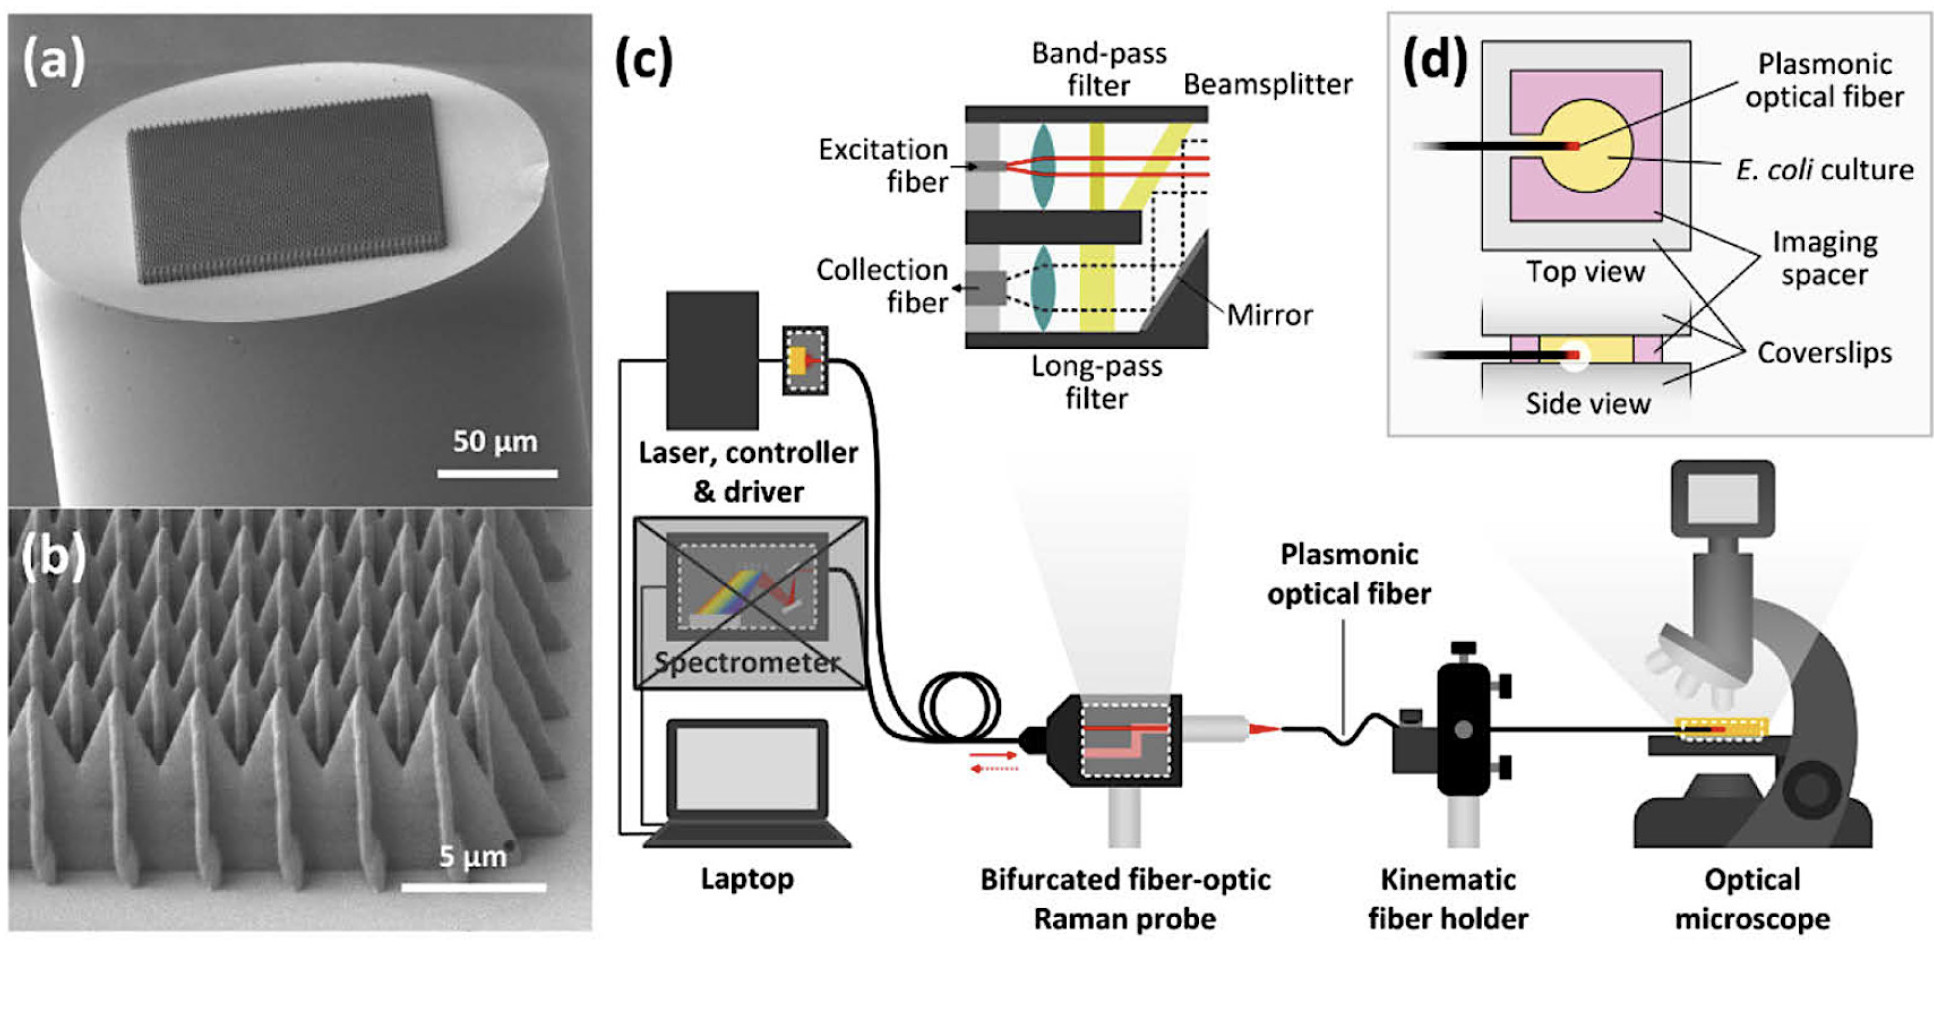 The fabricated plasmonic optical fiber images and experimental setup